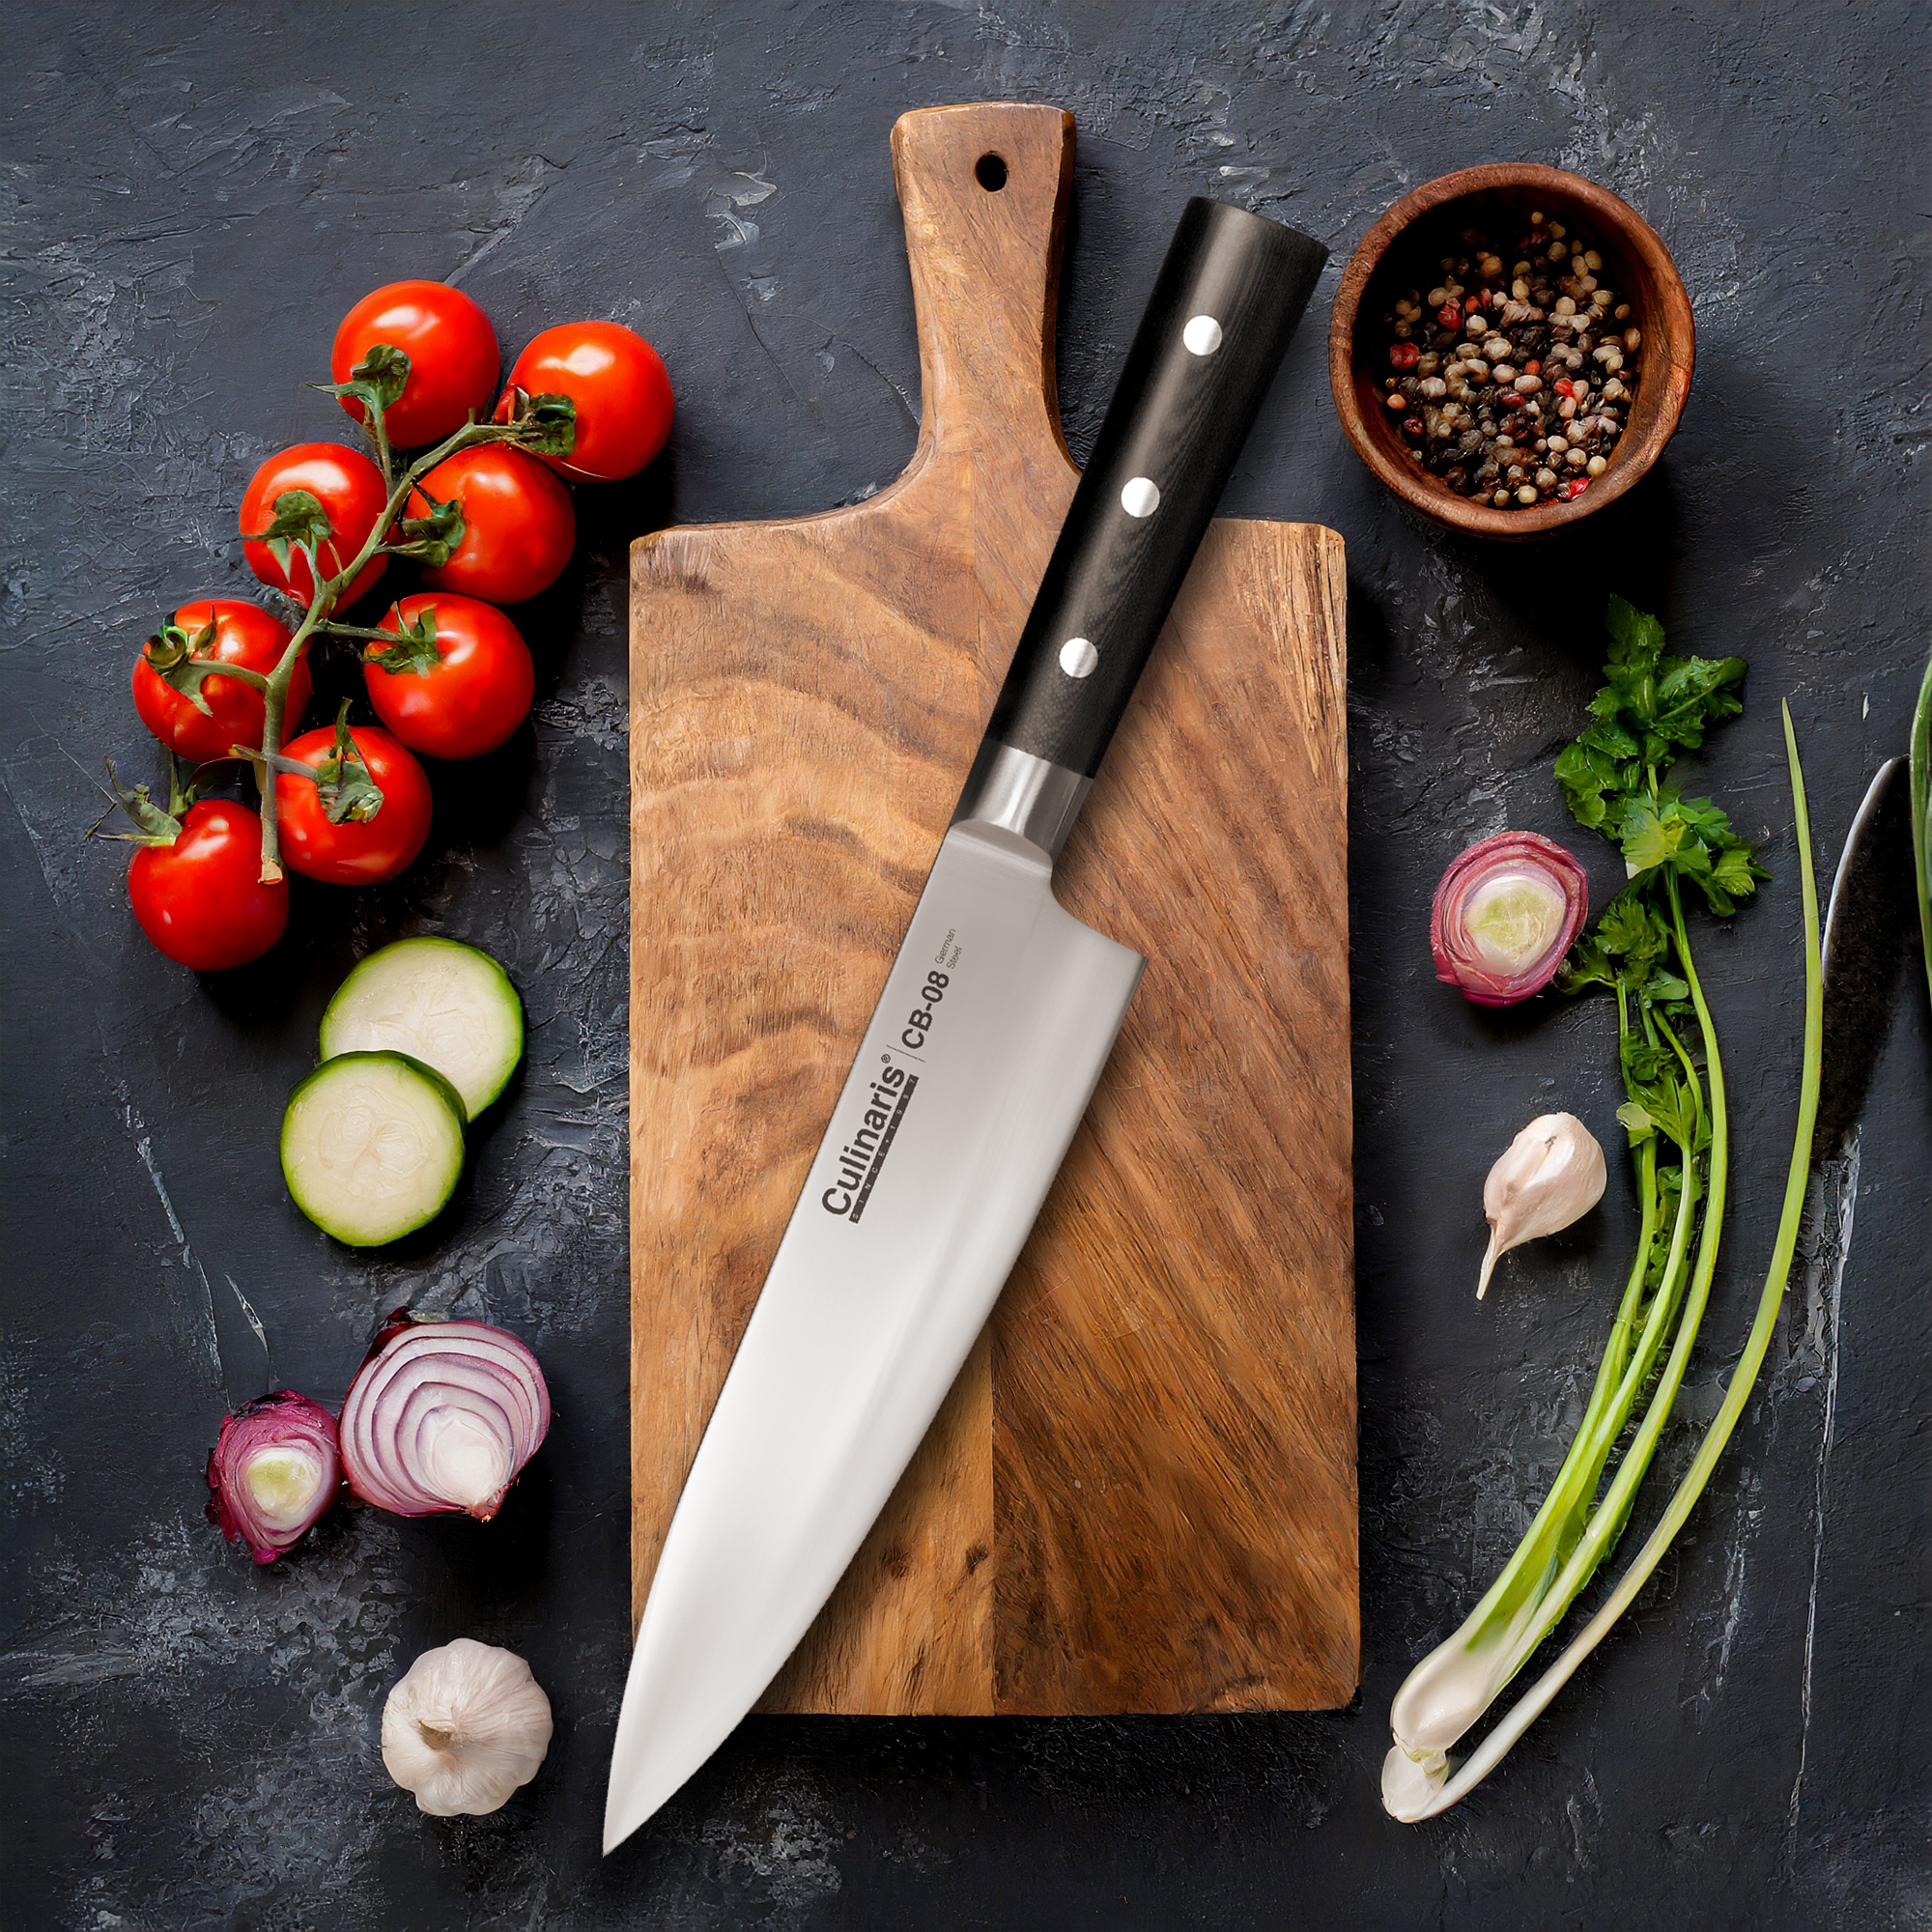 Culinaris - Knife Set - Chef's Knife CB-08 + Paring Knife CB-01 + Nakiri CB-06 + Bread Knife CB-09 + Magnetic Knife Bar CB-14